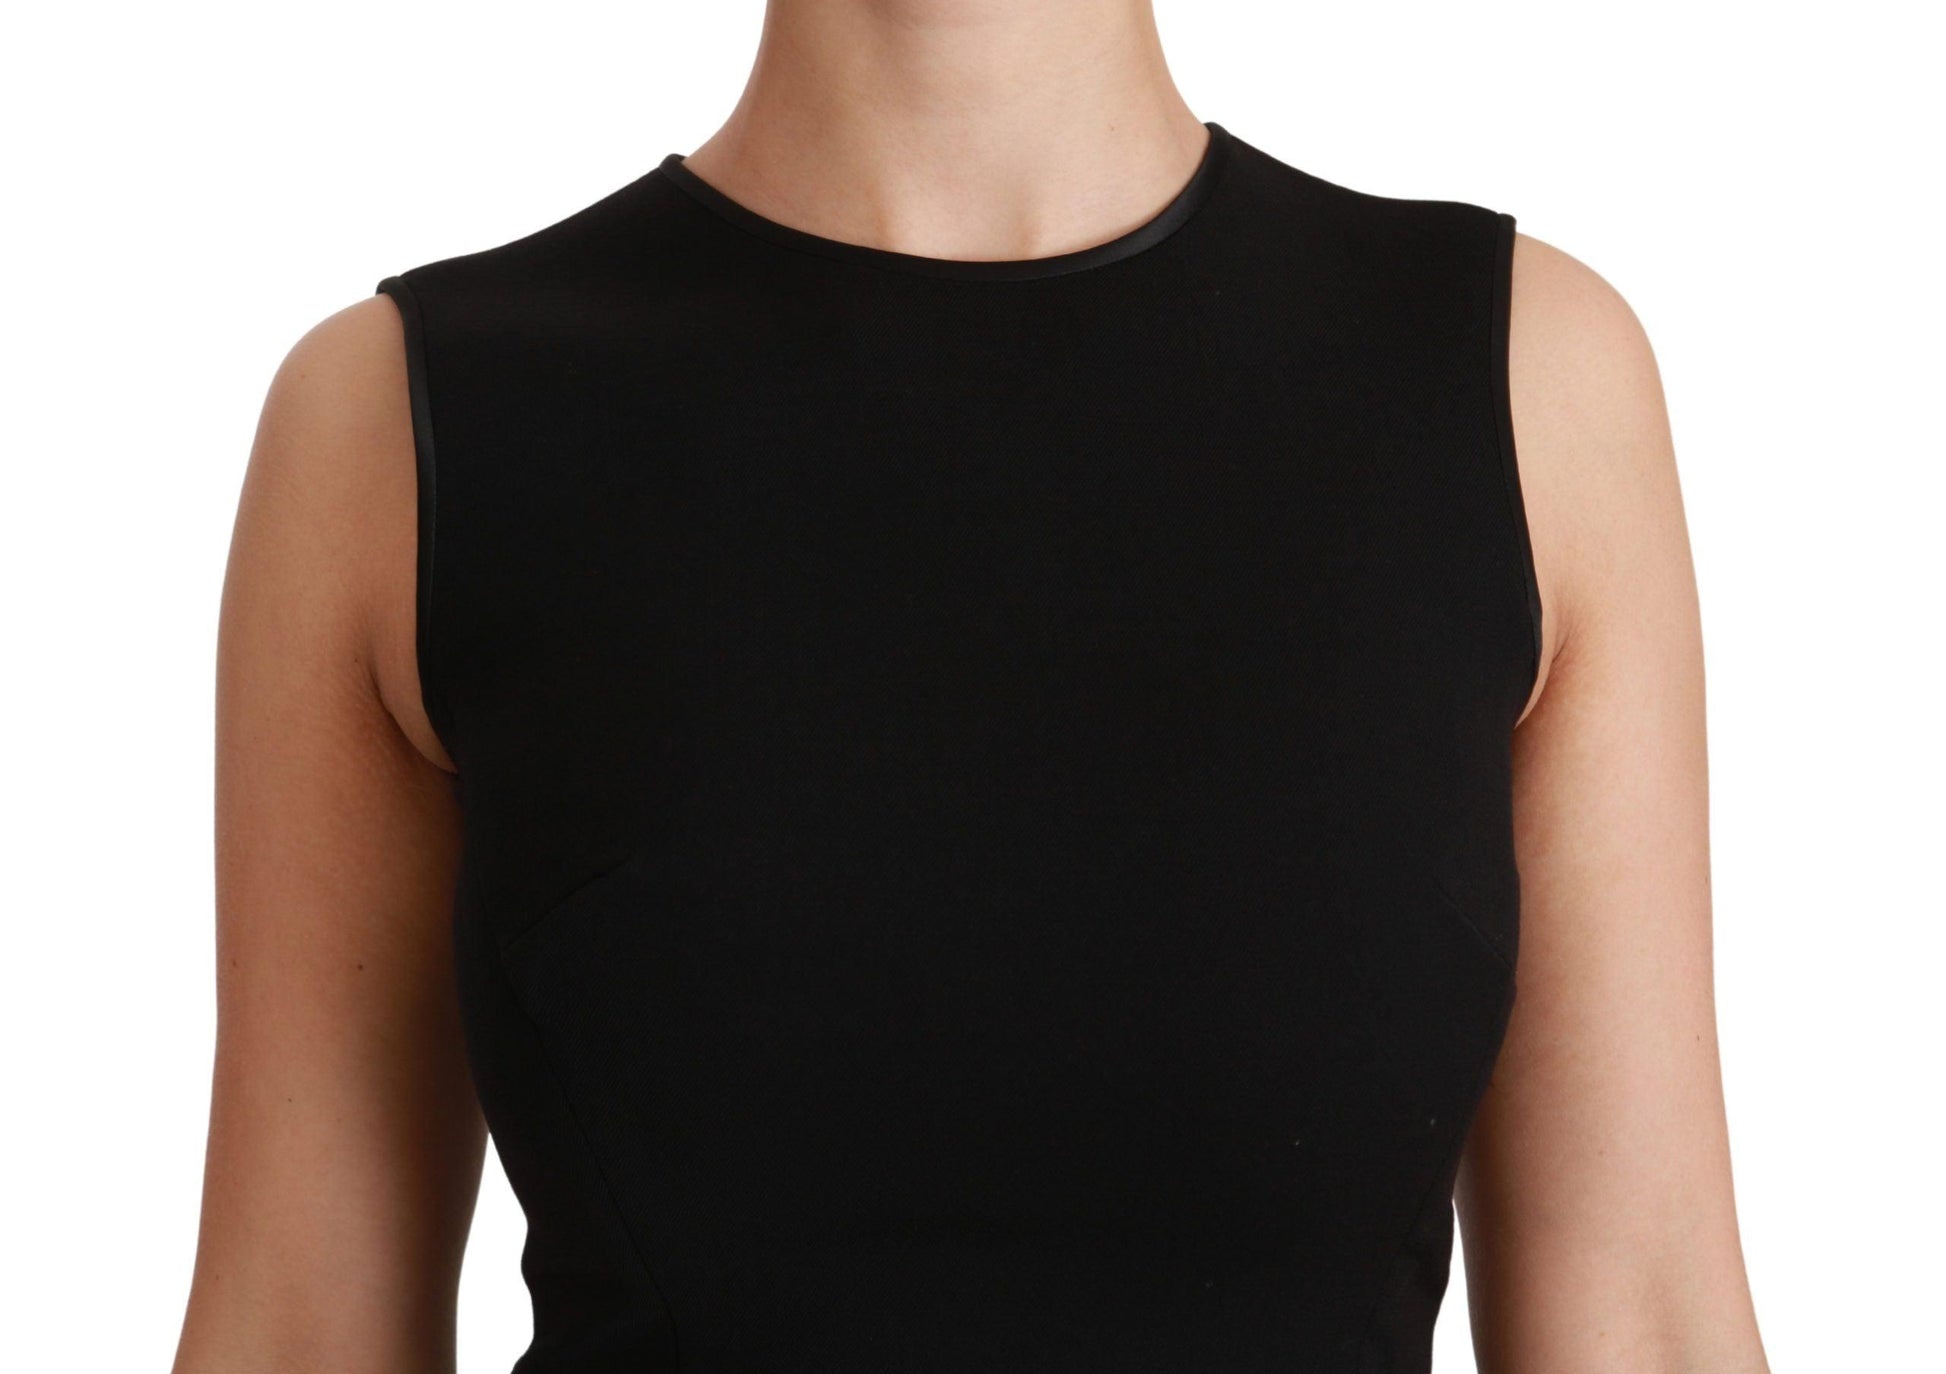 Dolce & Gabbana Elegant Black Fit Flare Wool Blend Dress - PER.FASHION